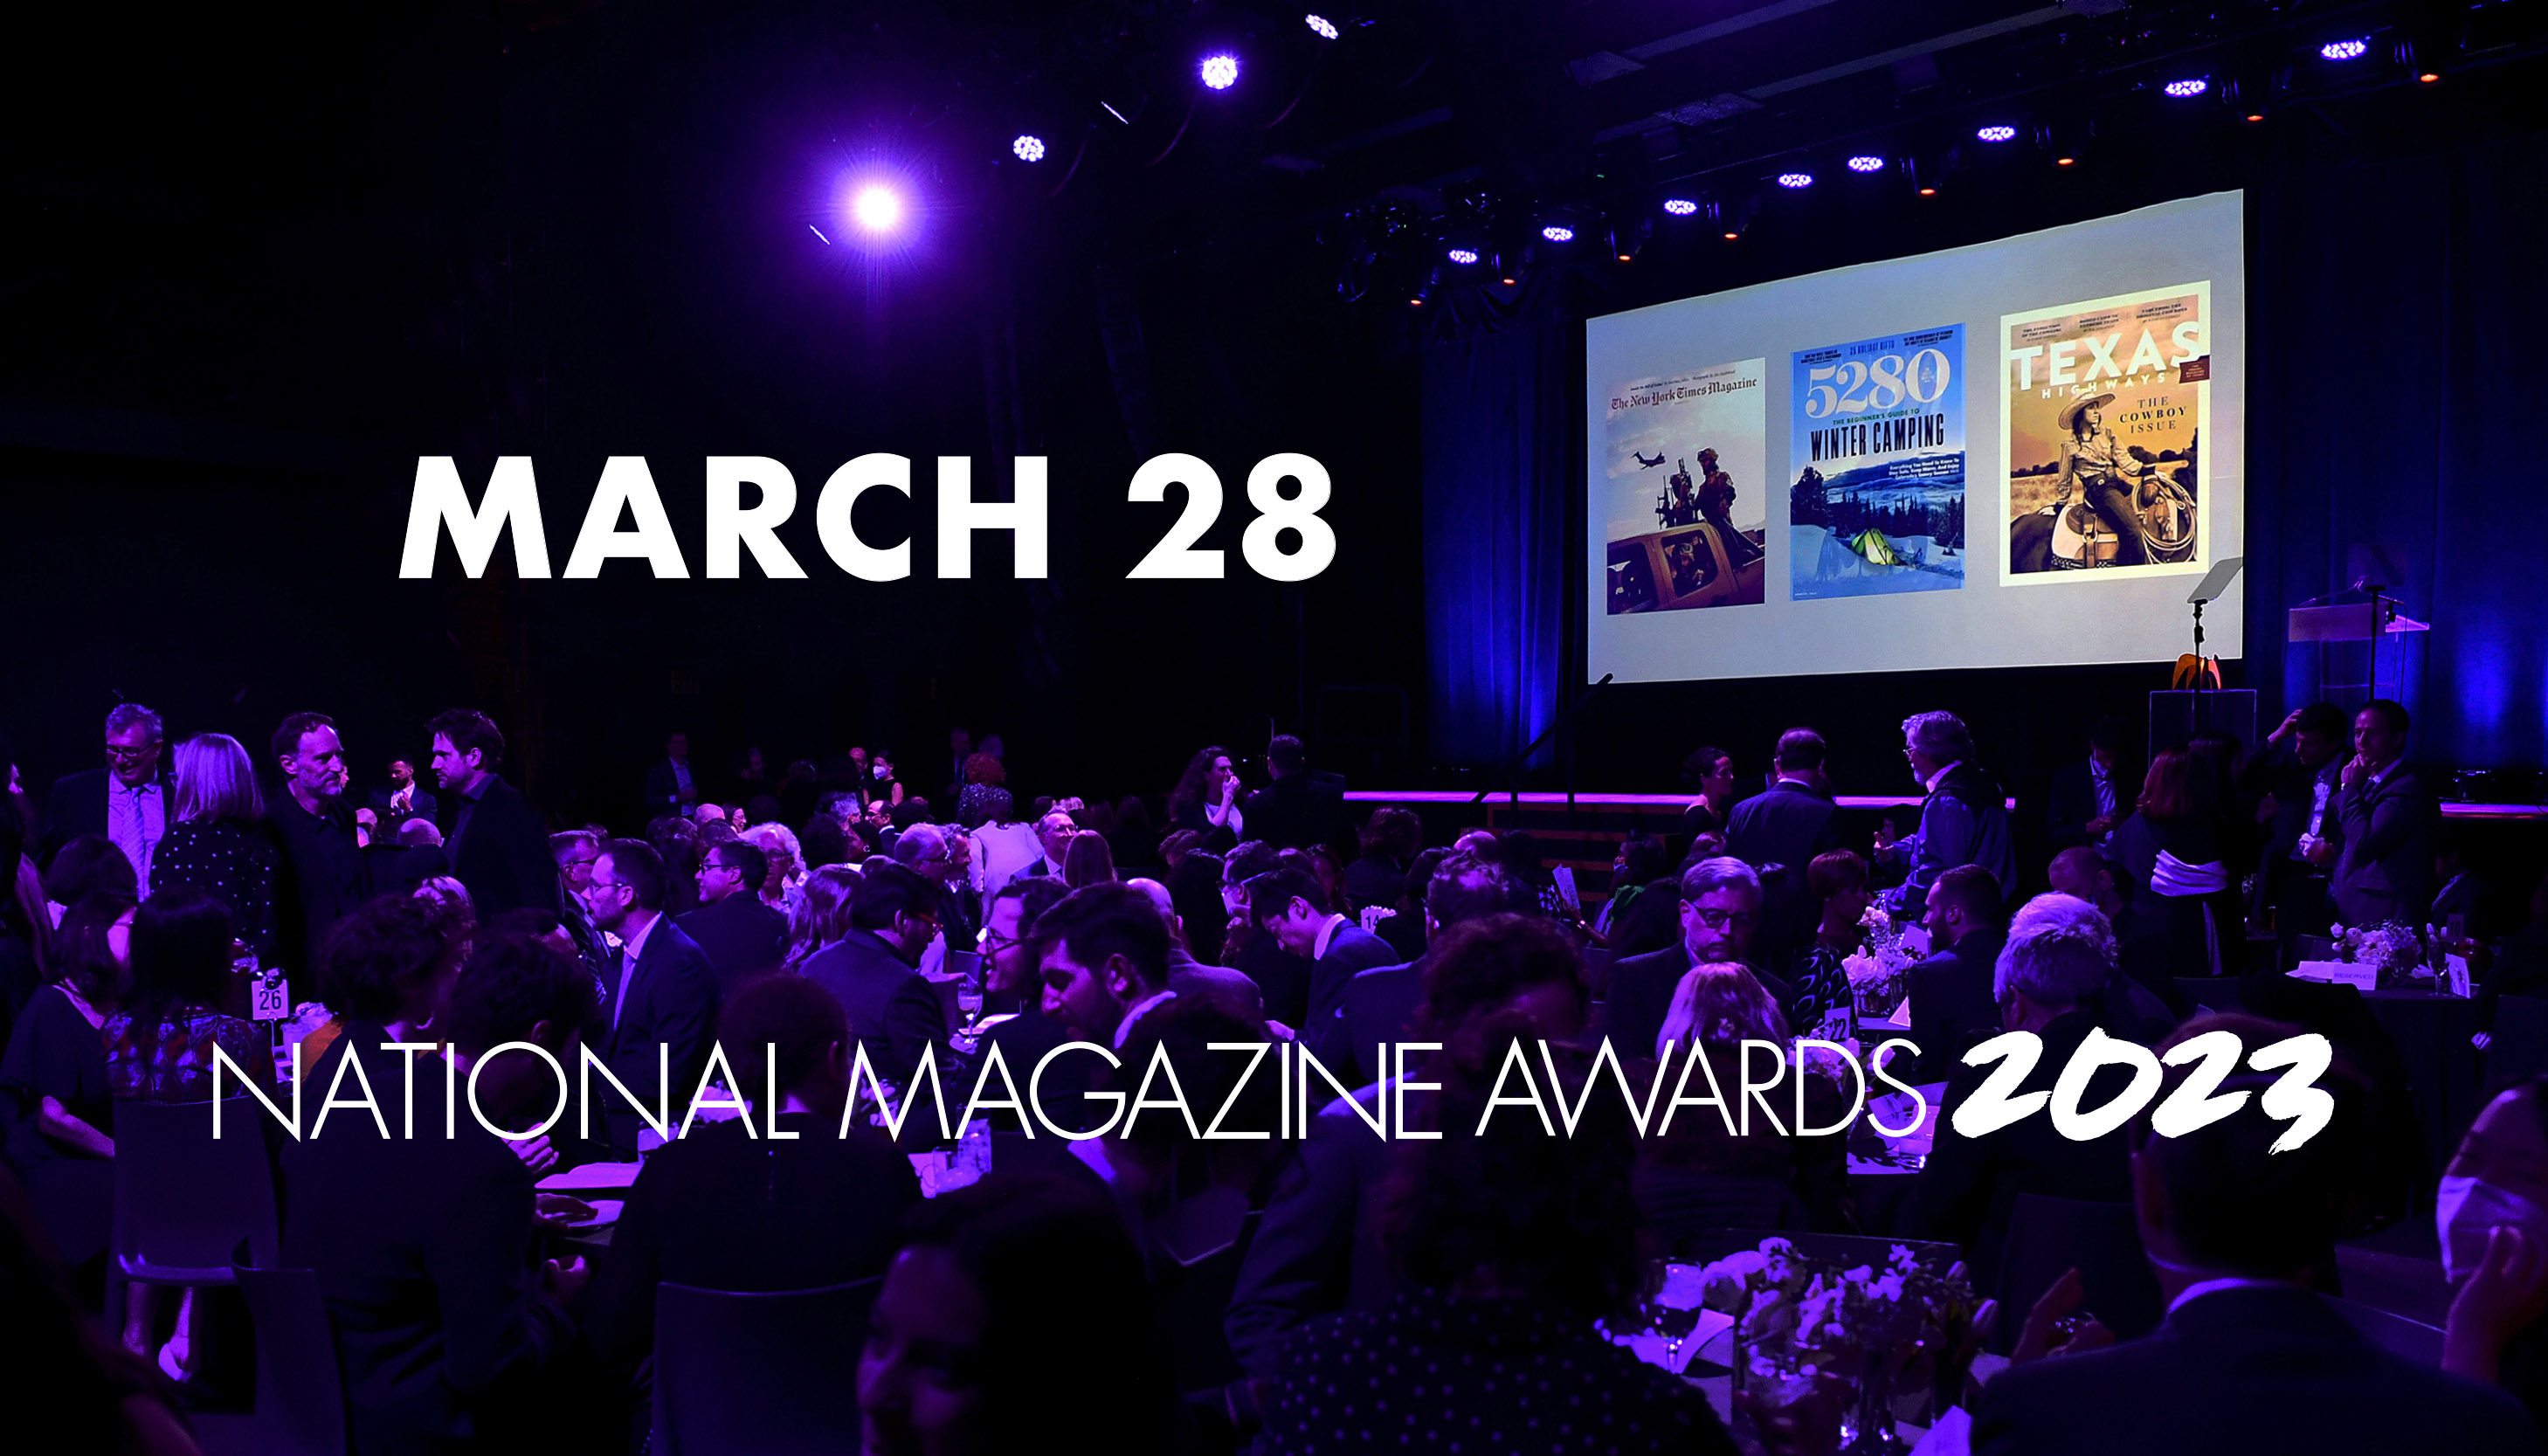 March 28 - National Magazine Awards